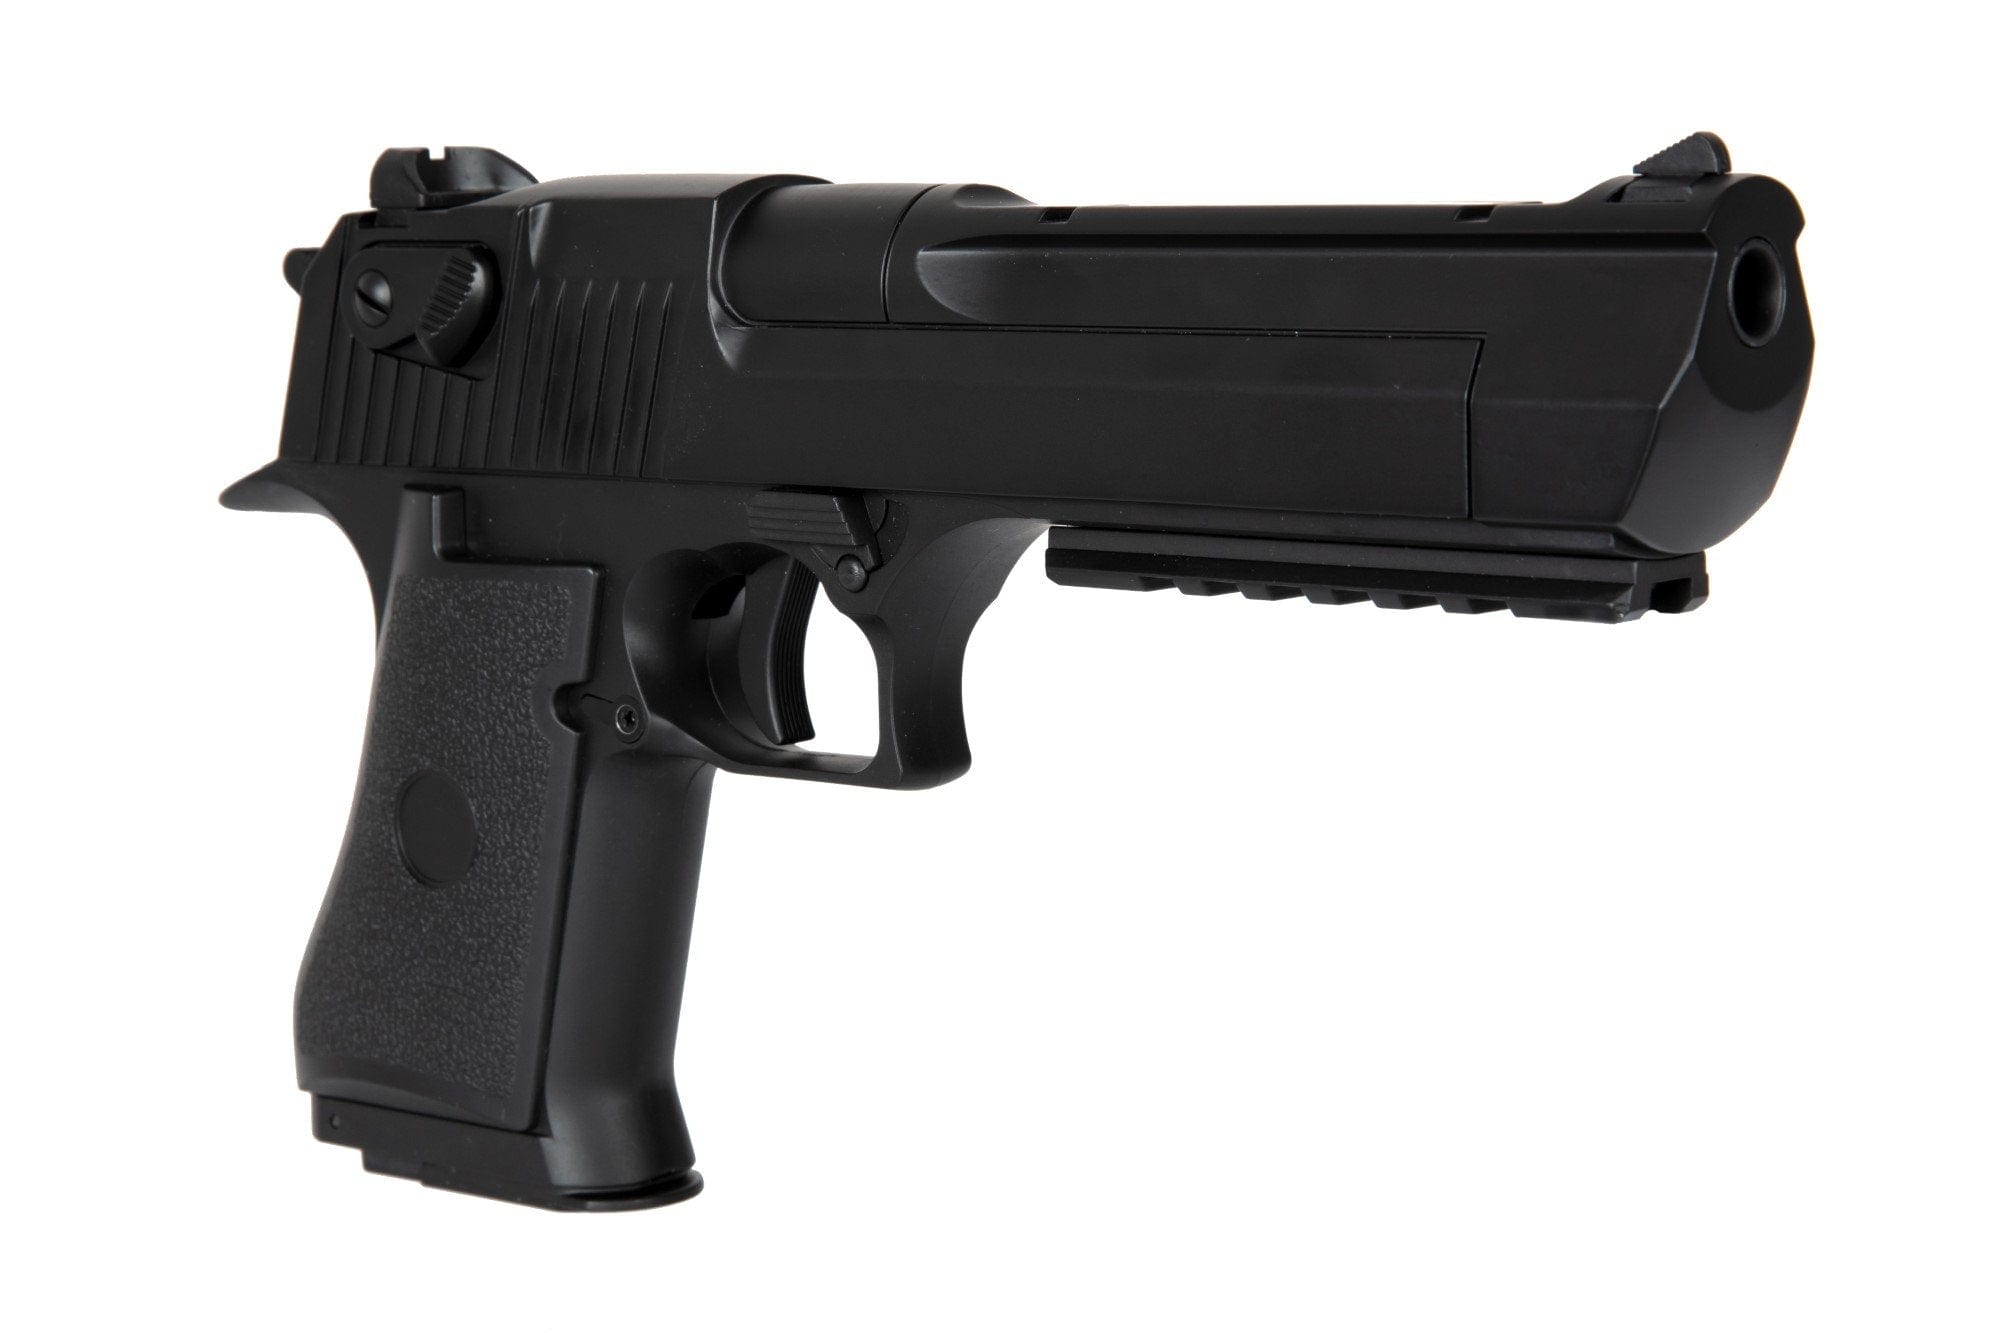 Replika pistoletu CM121S MOSFET Edition (bez akumulatora)